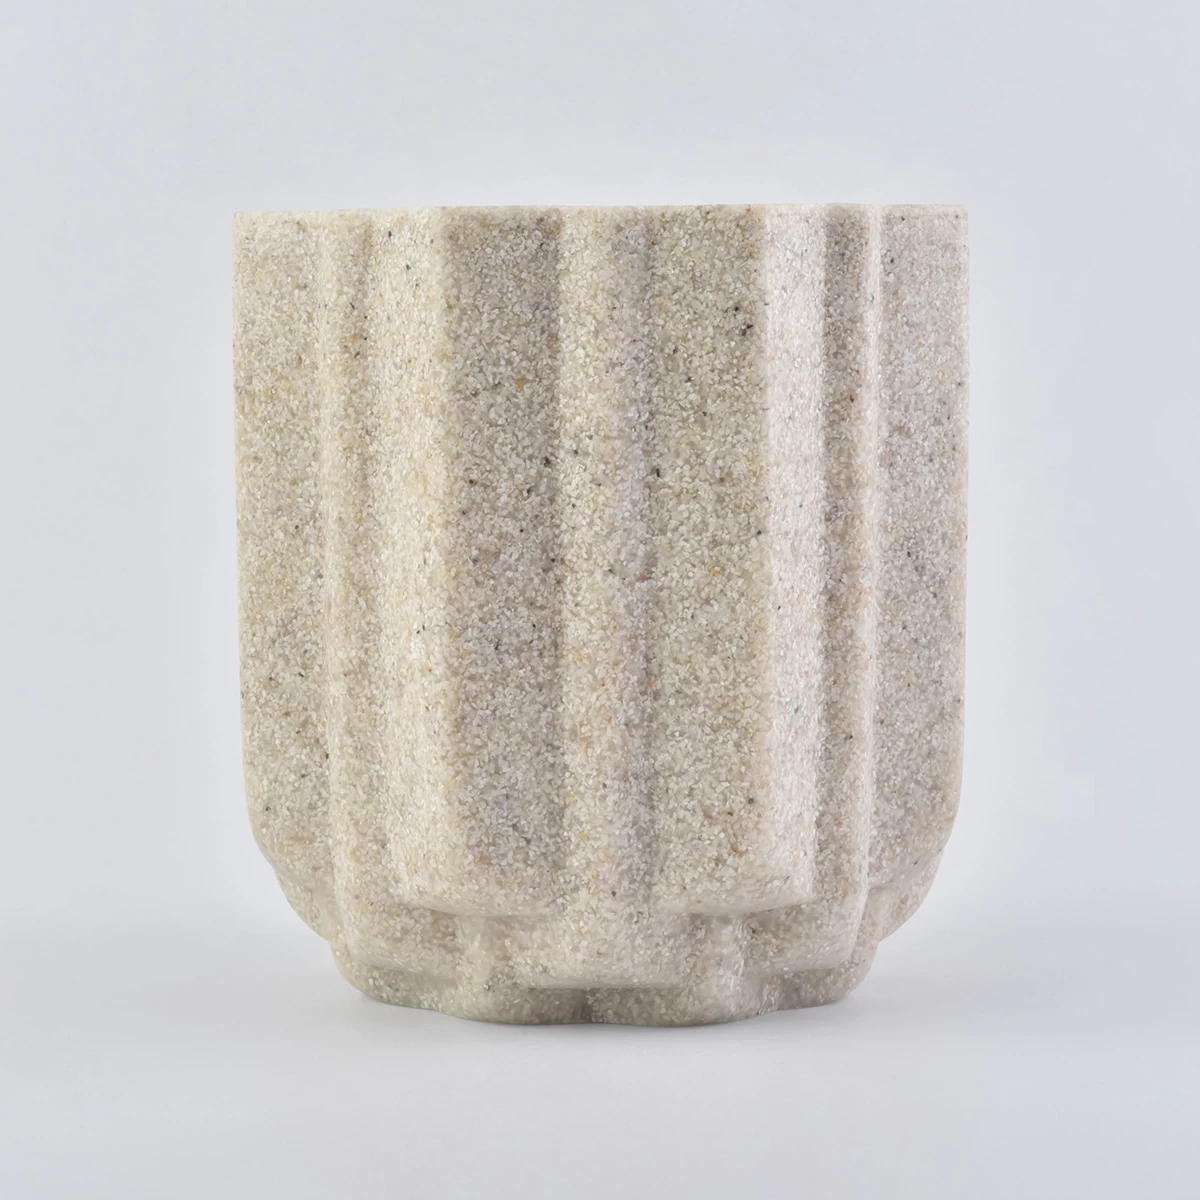 Sunny designed luxury cement concrete candle jars